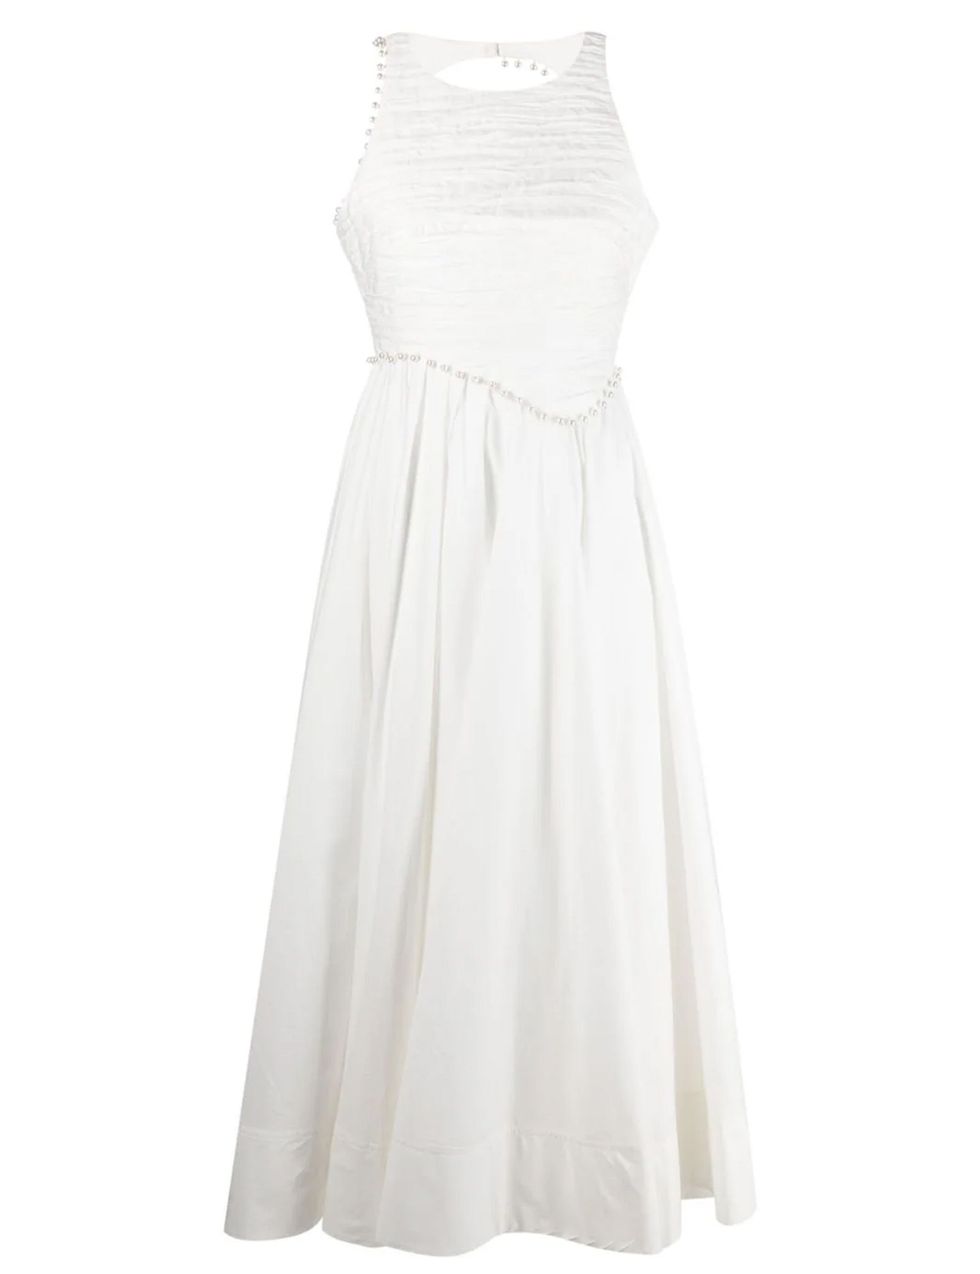 Chic White Summer Dress